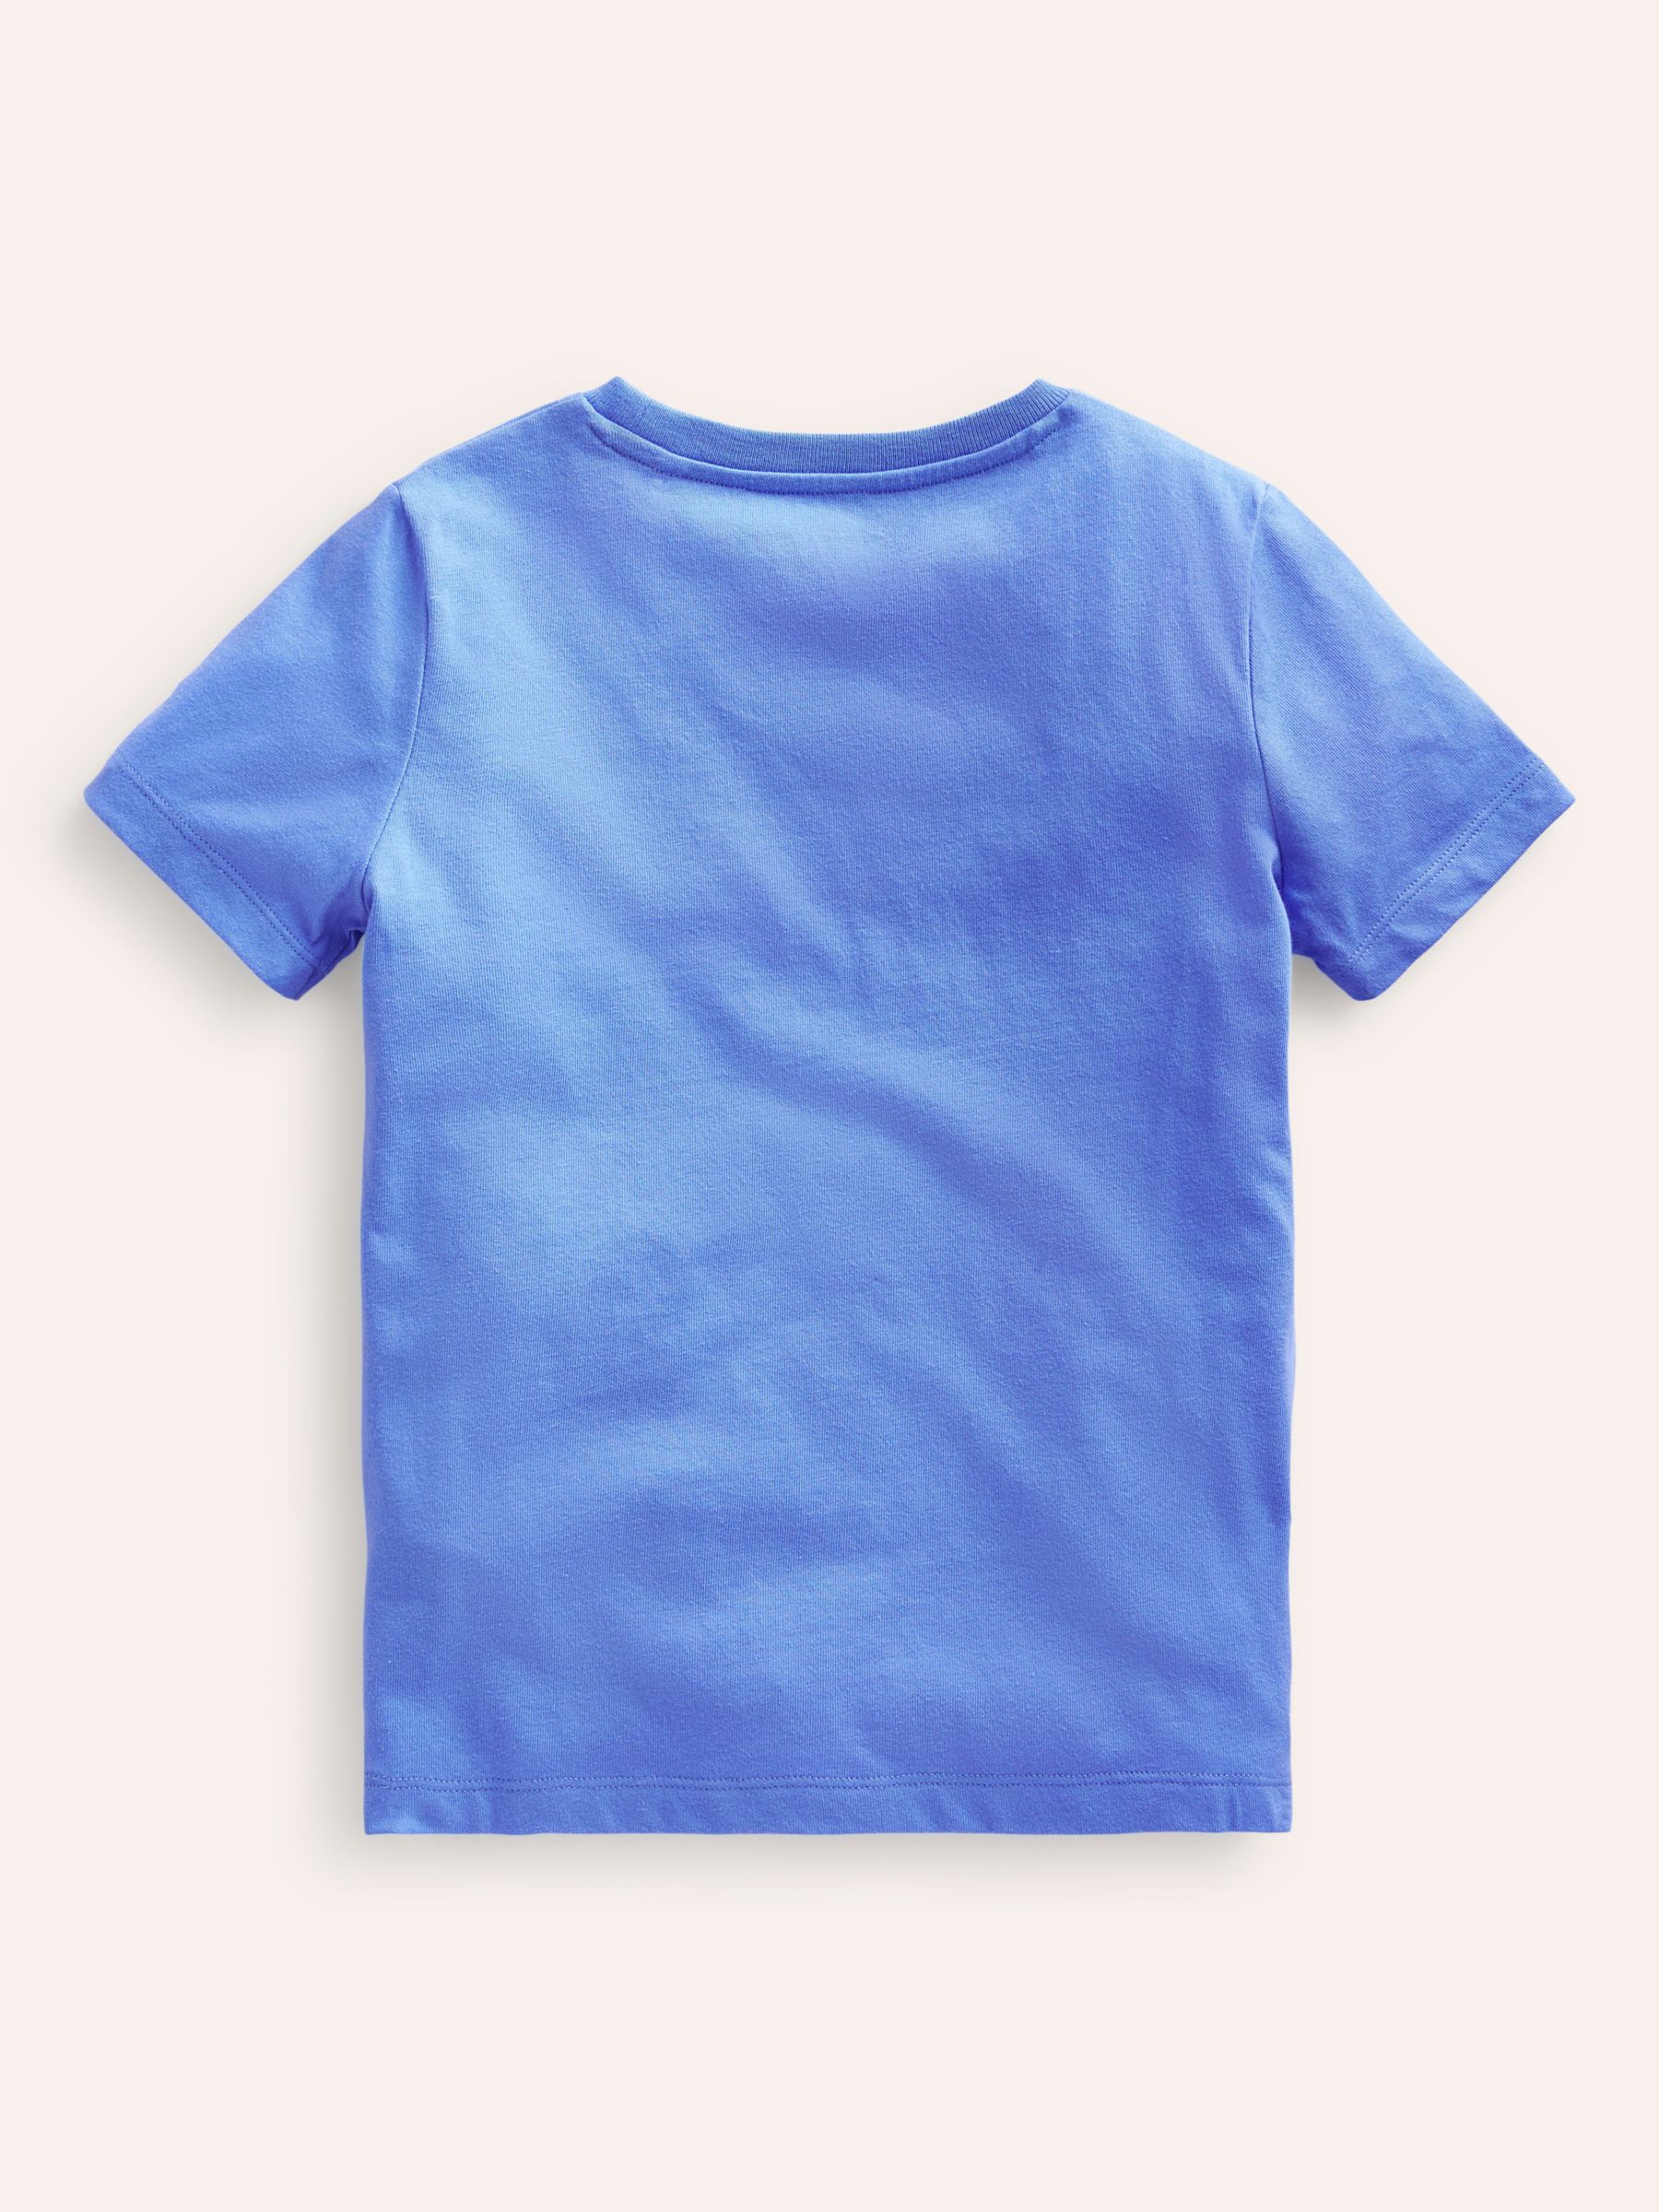 Mini Boden Kids' Chainstitch Dino T-Shirt, Surf Blue/Multi, 2-3 years